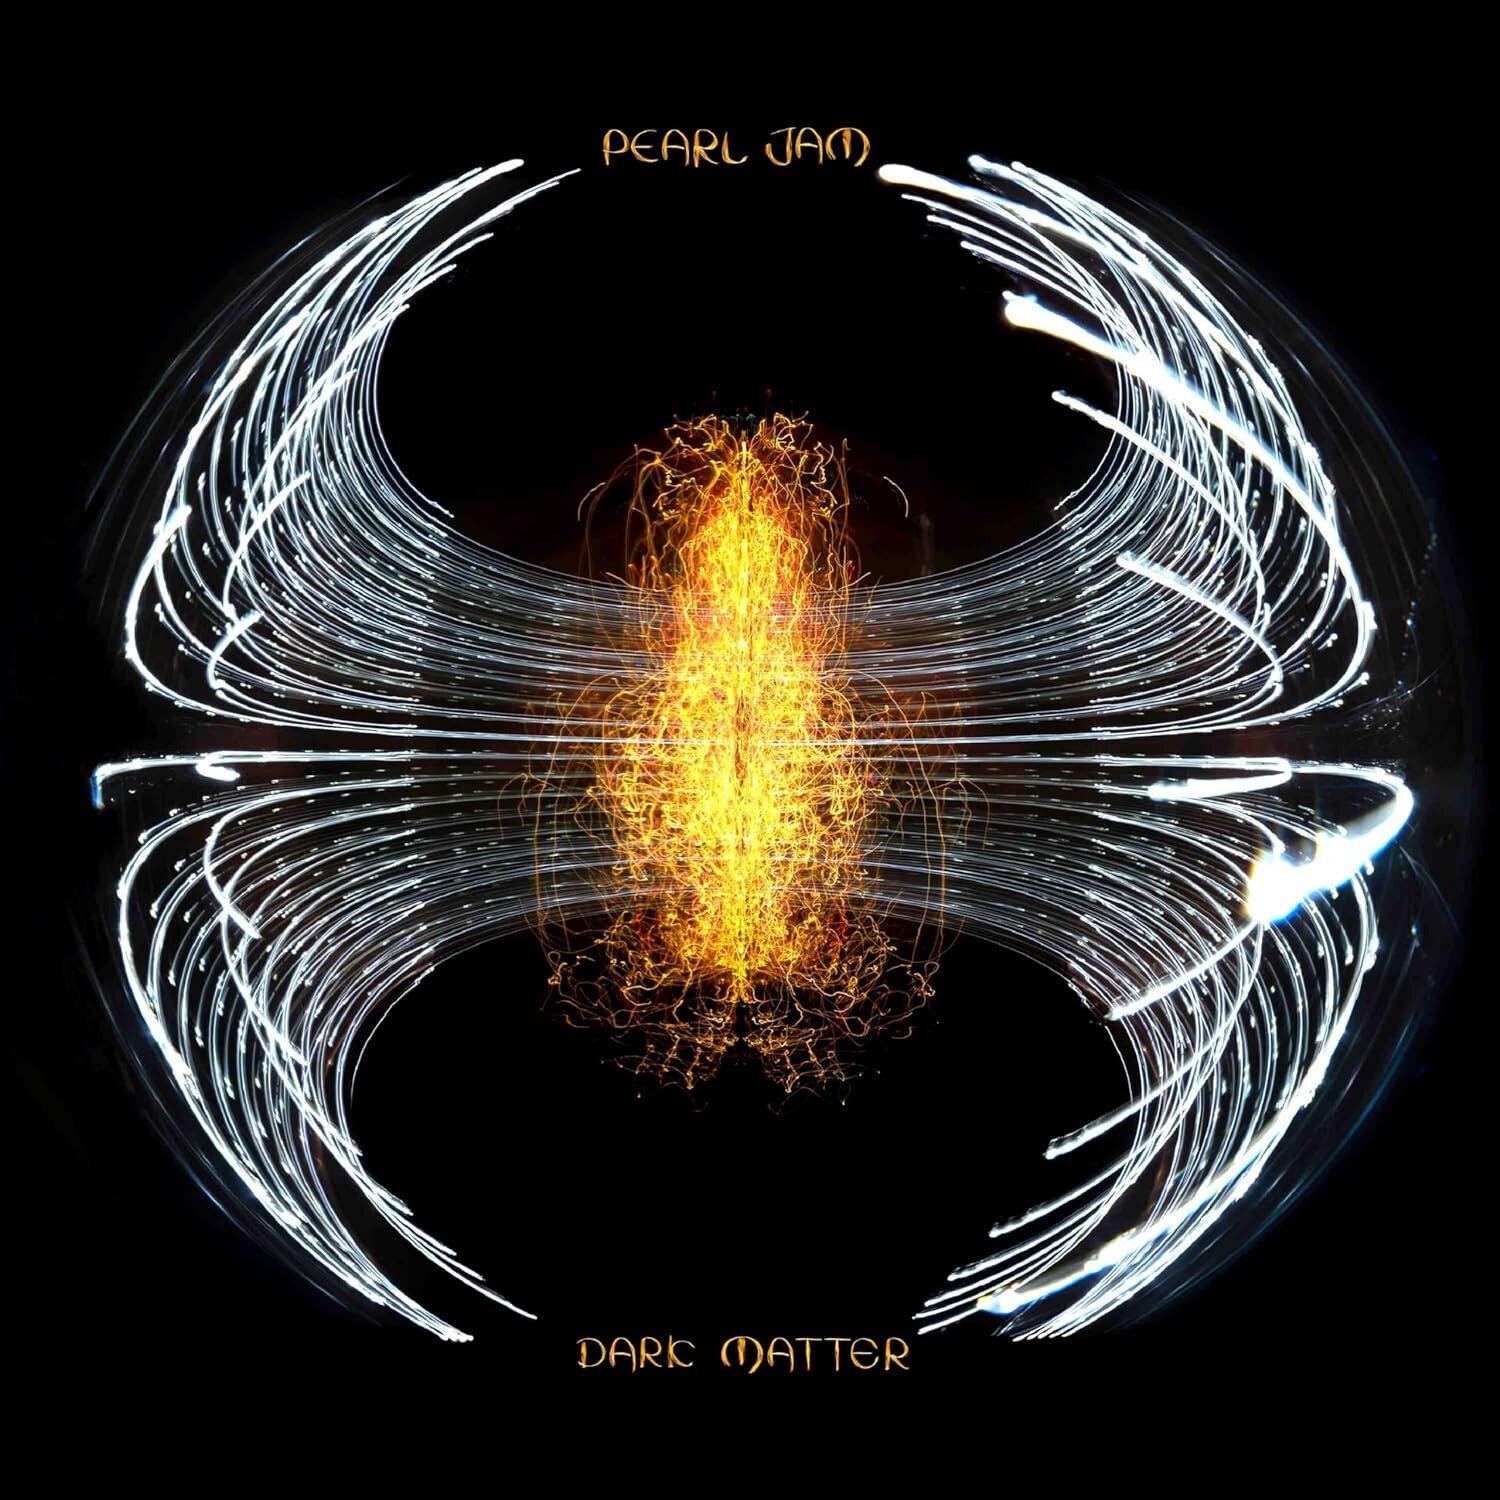 Glasbene CD Pearl Jam - Dark Matter (CD)